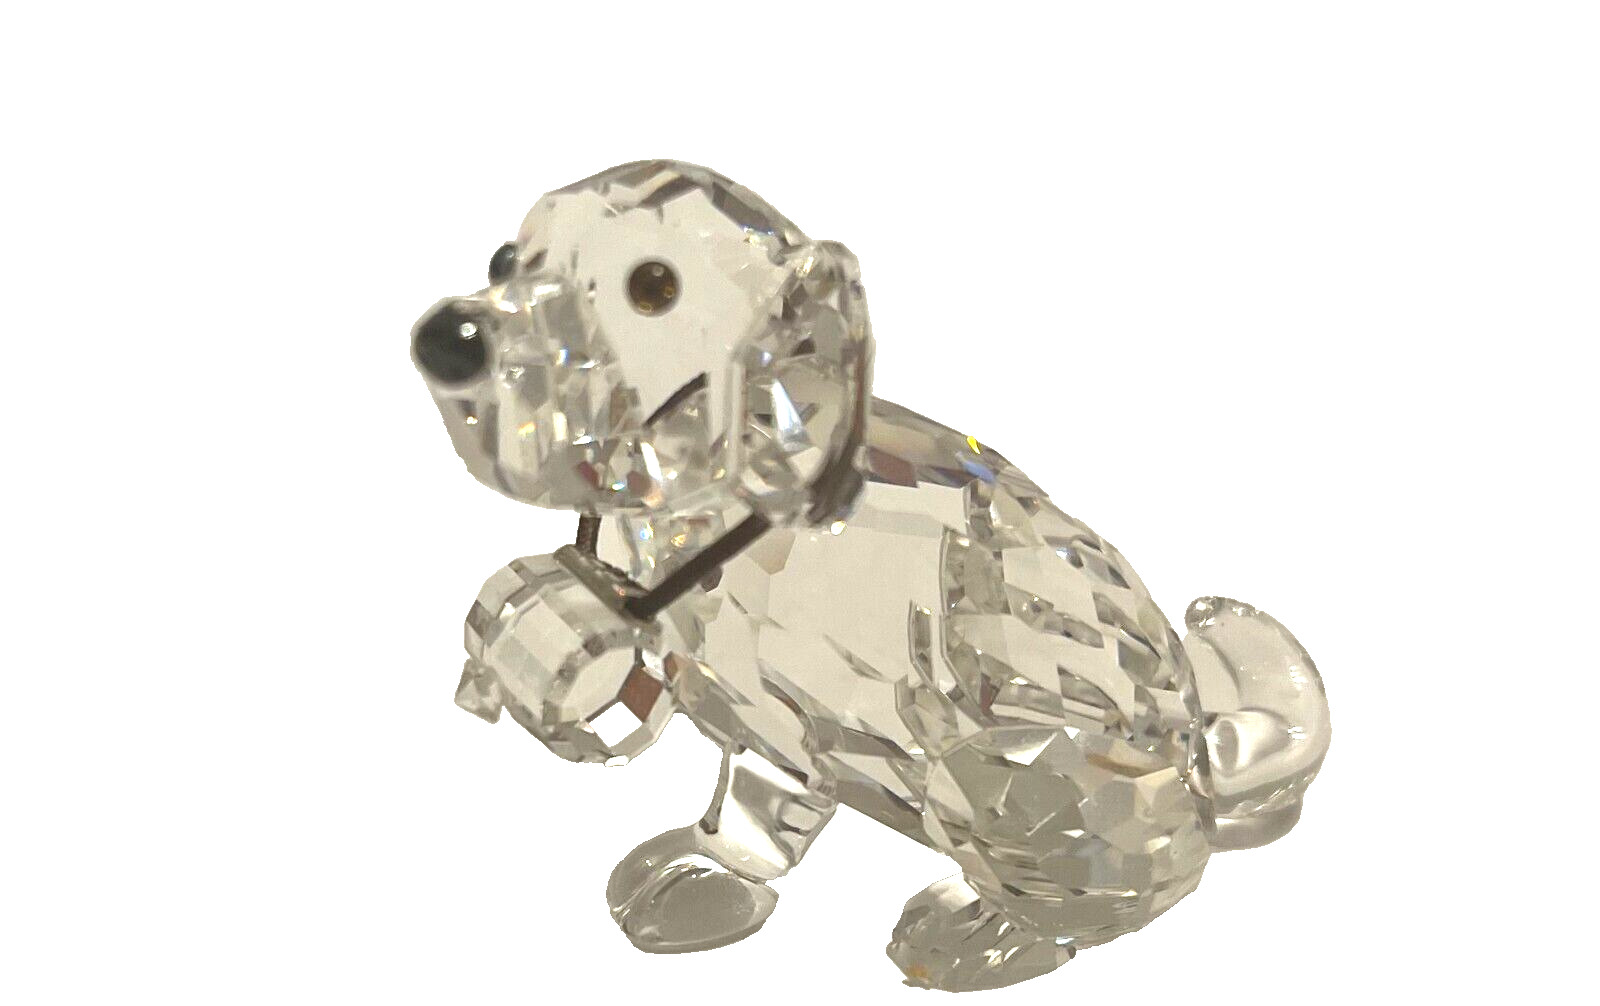 Swarovski Silver Crystal St Bernard Puppy Dog W/ Box